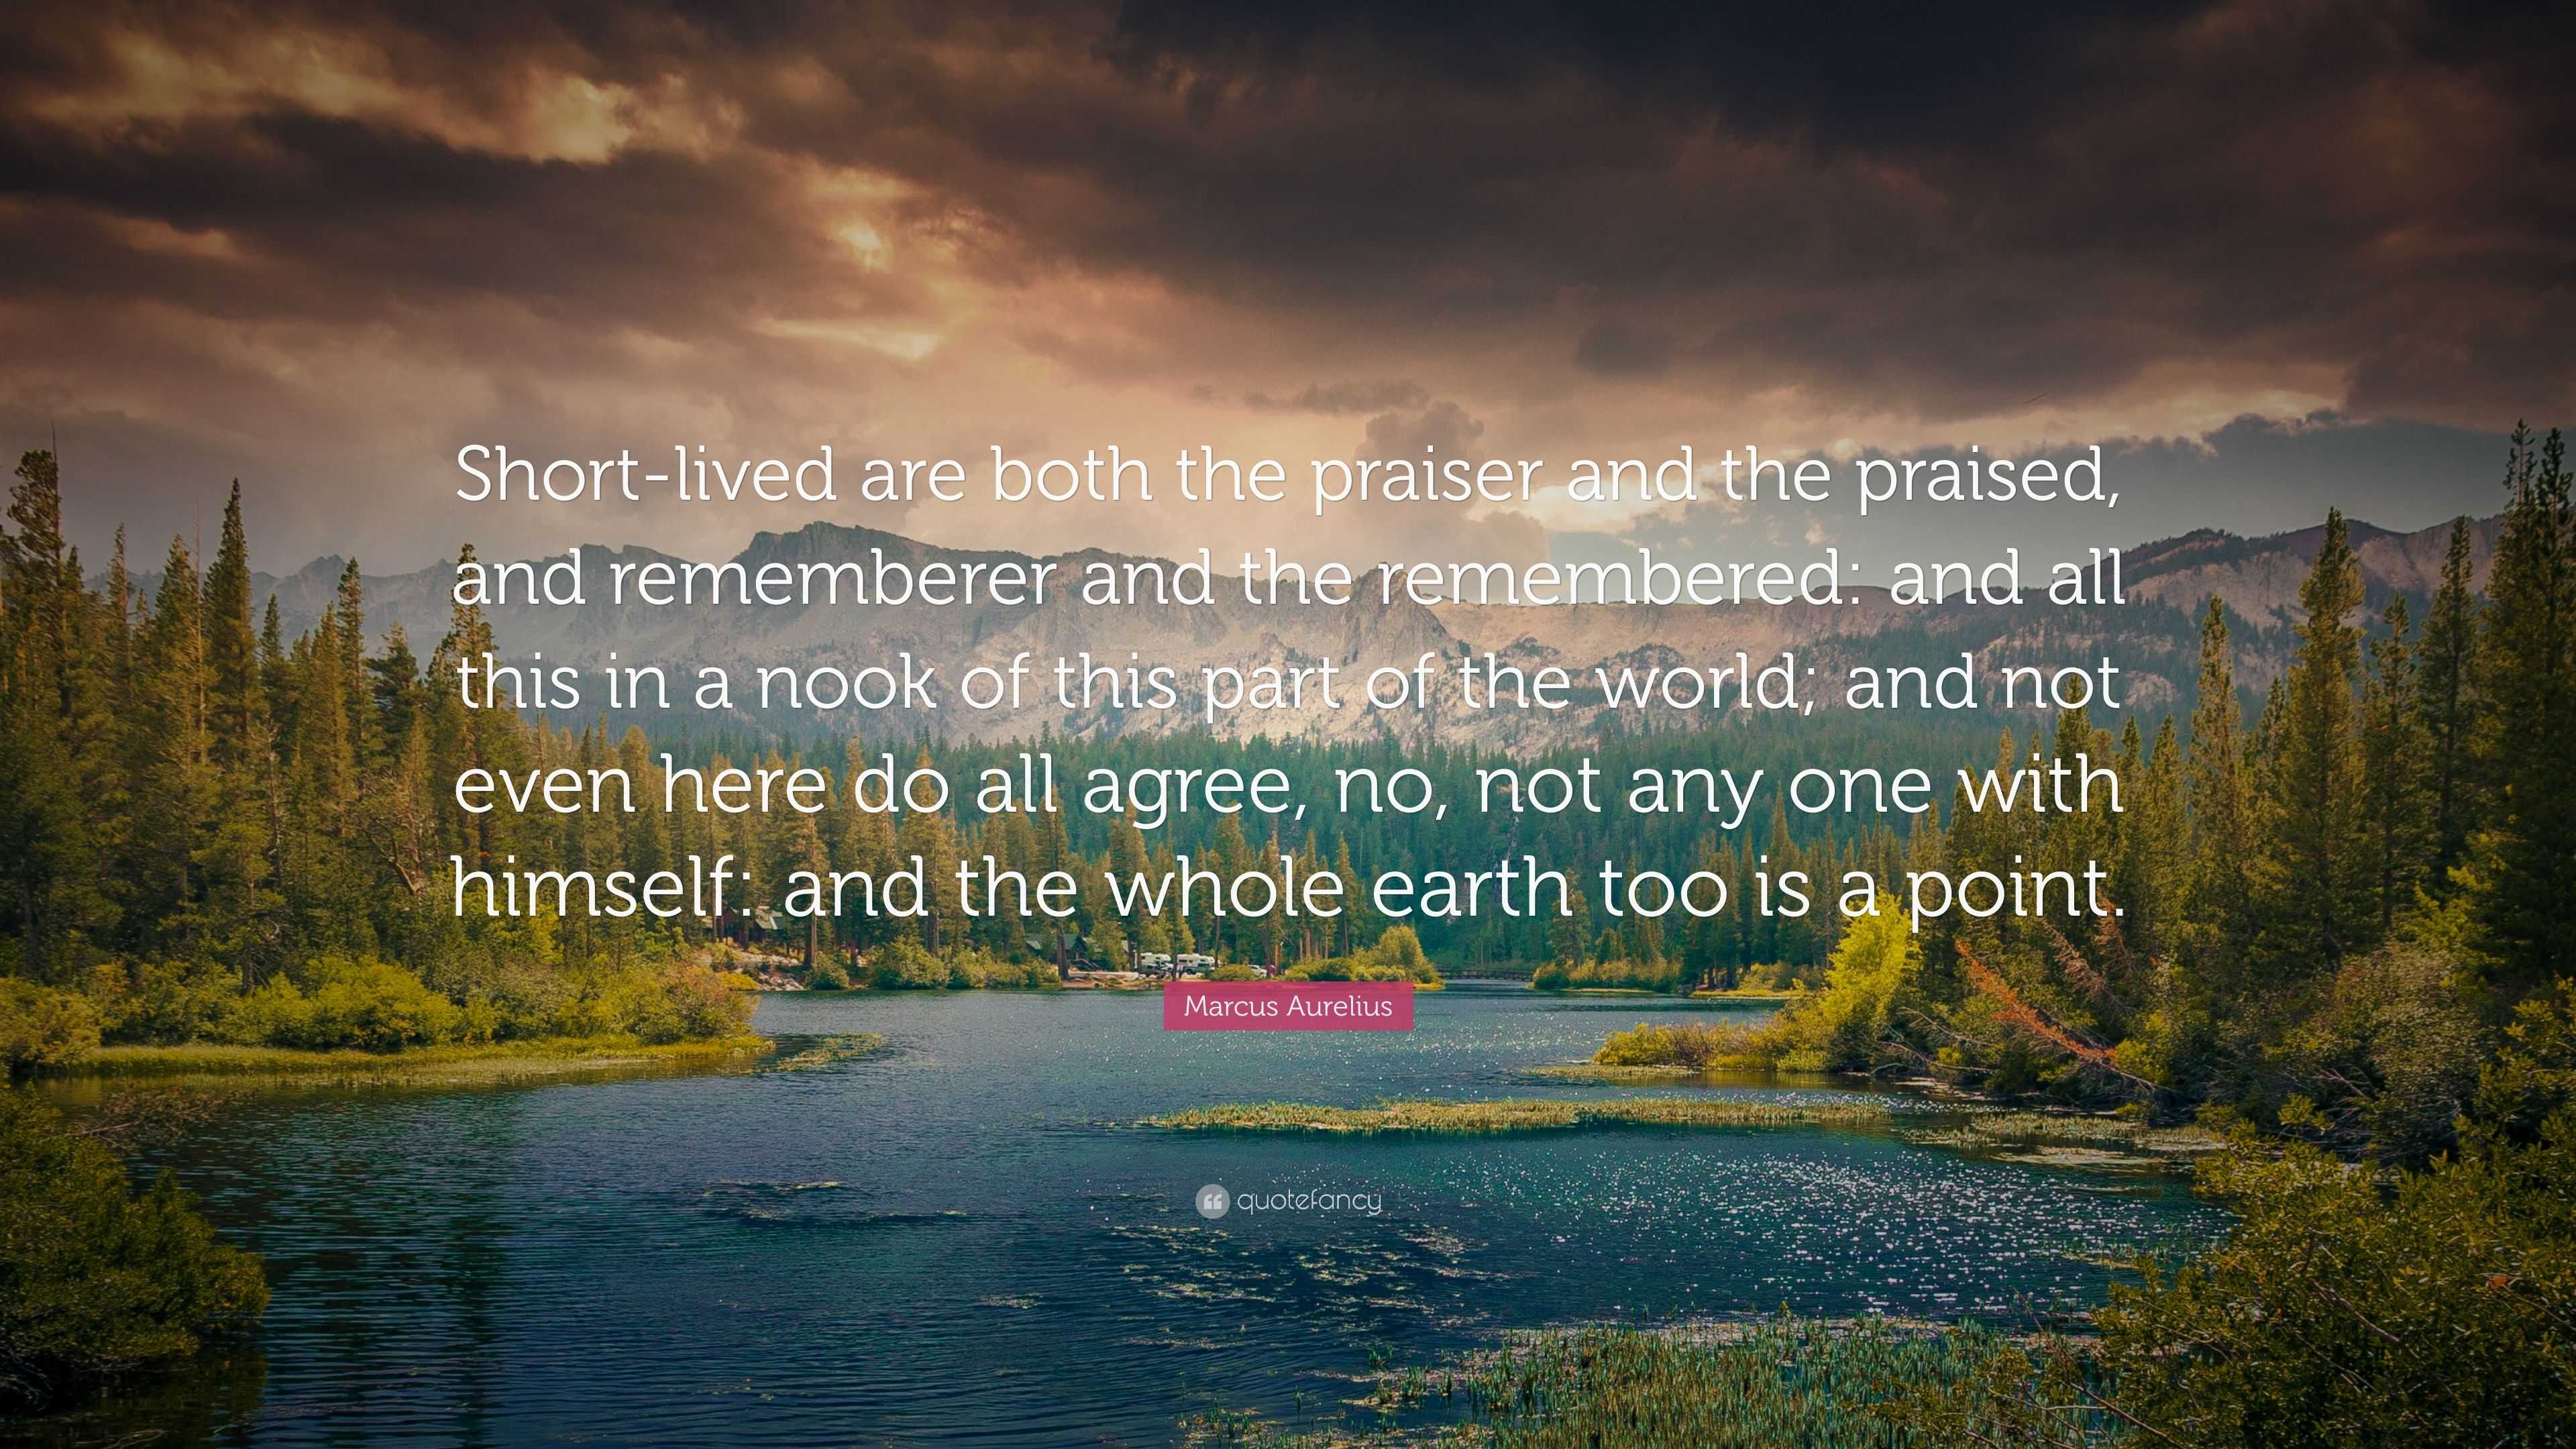 Marcus Aurelius Quote: “Short-lived are both the praiser and the ...